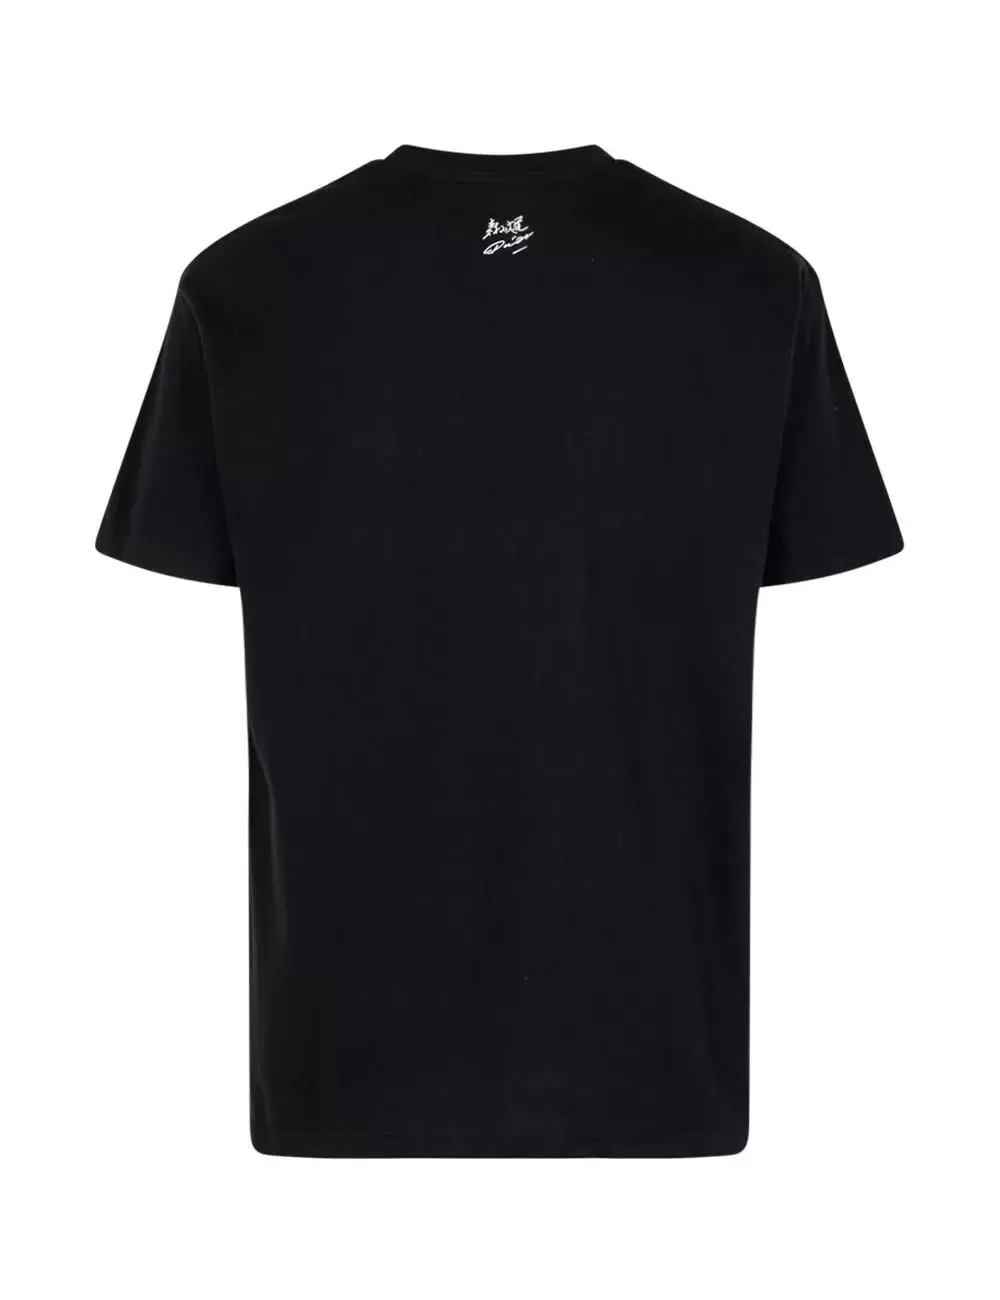 Supreme x Daido Moriyama Dog T-Shirt Black 